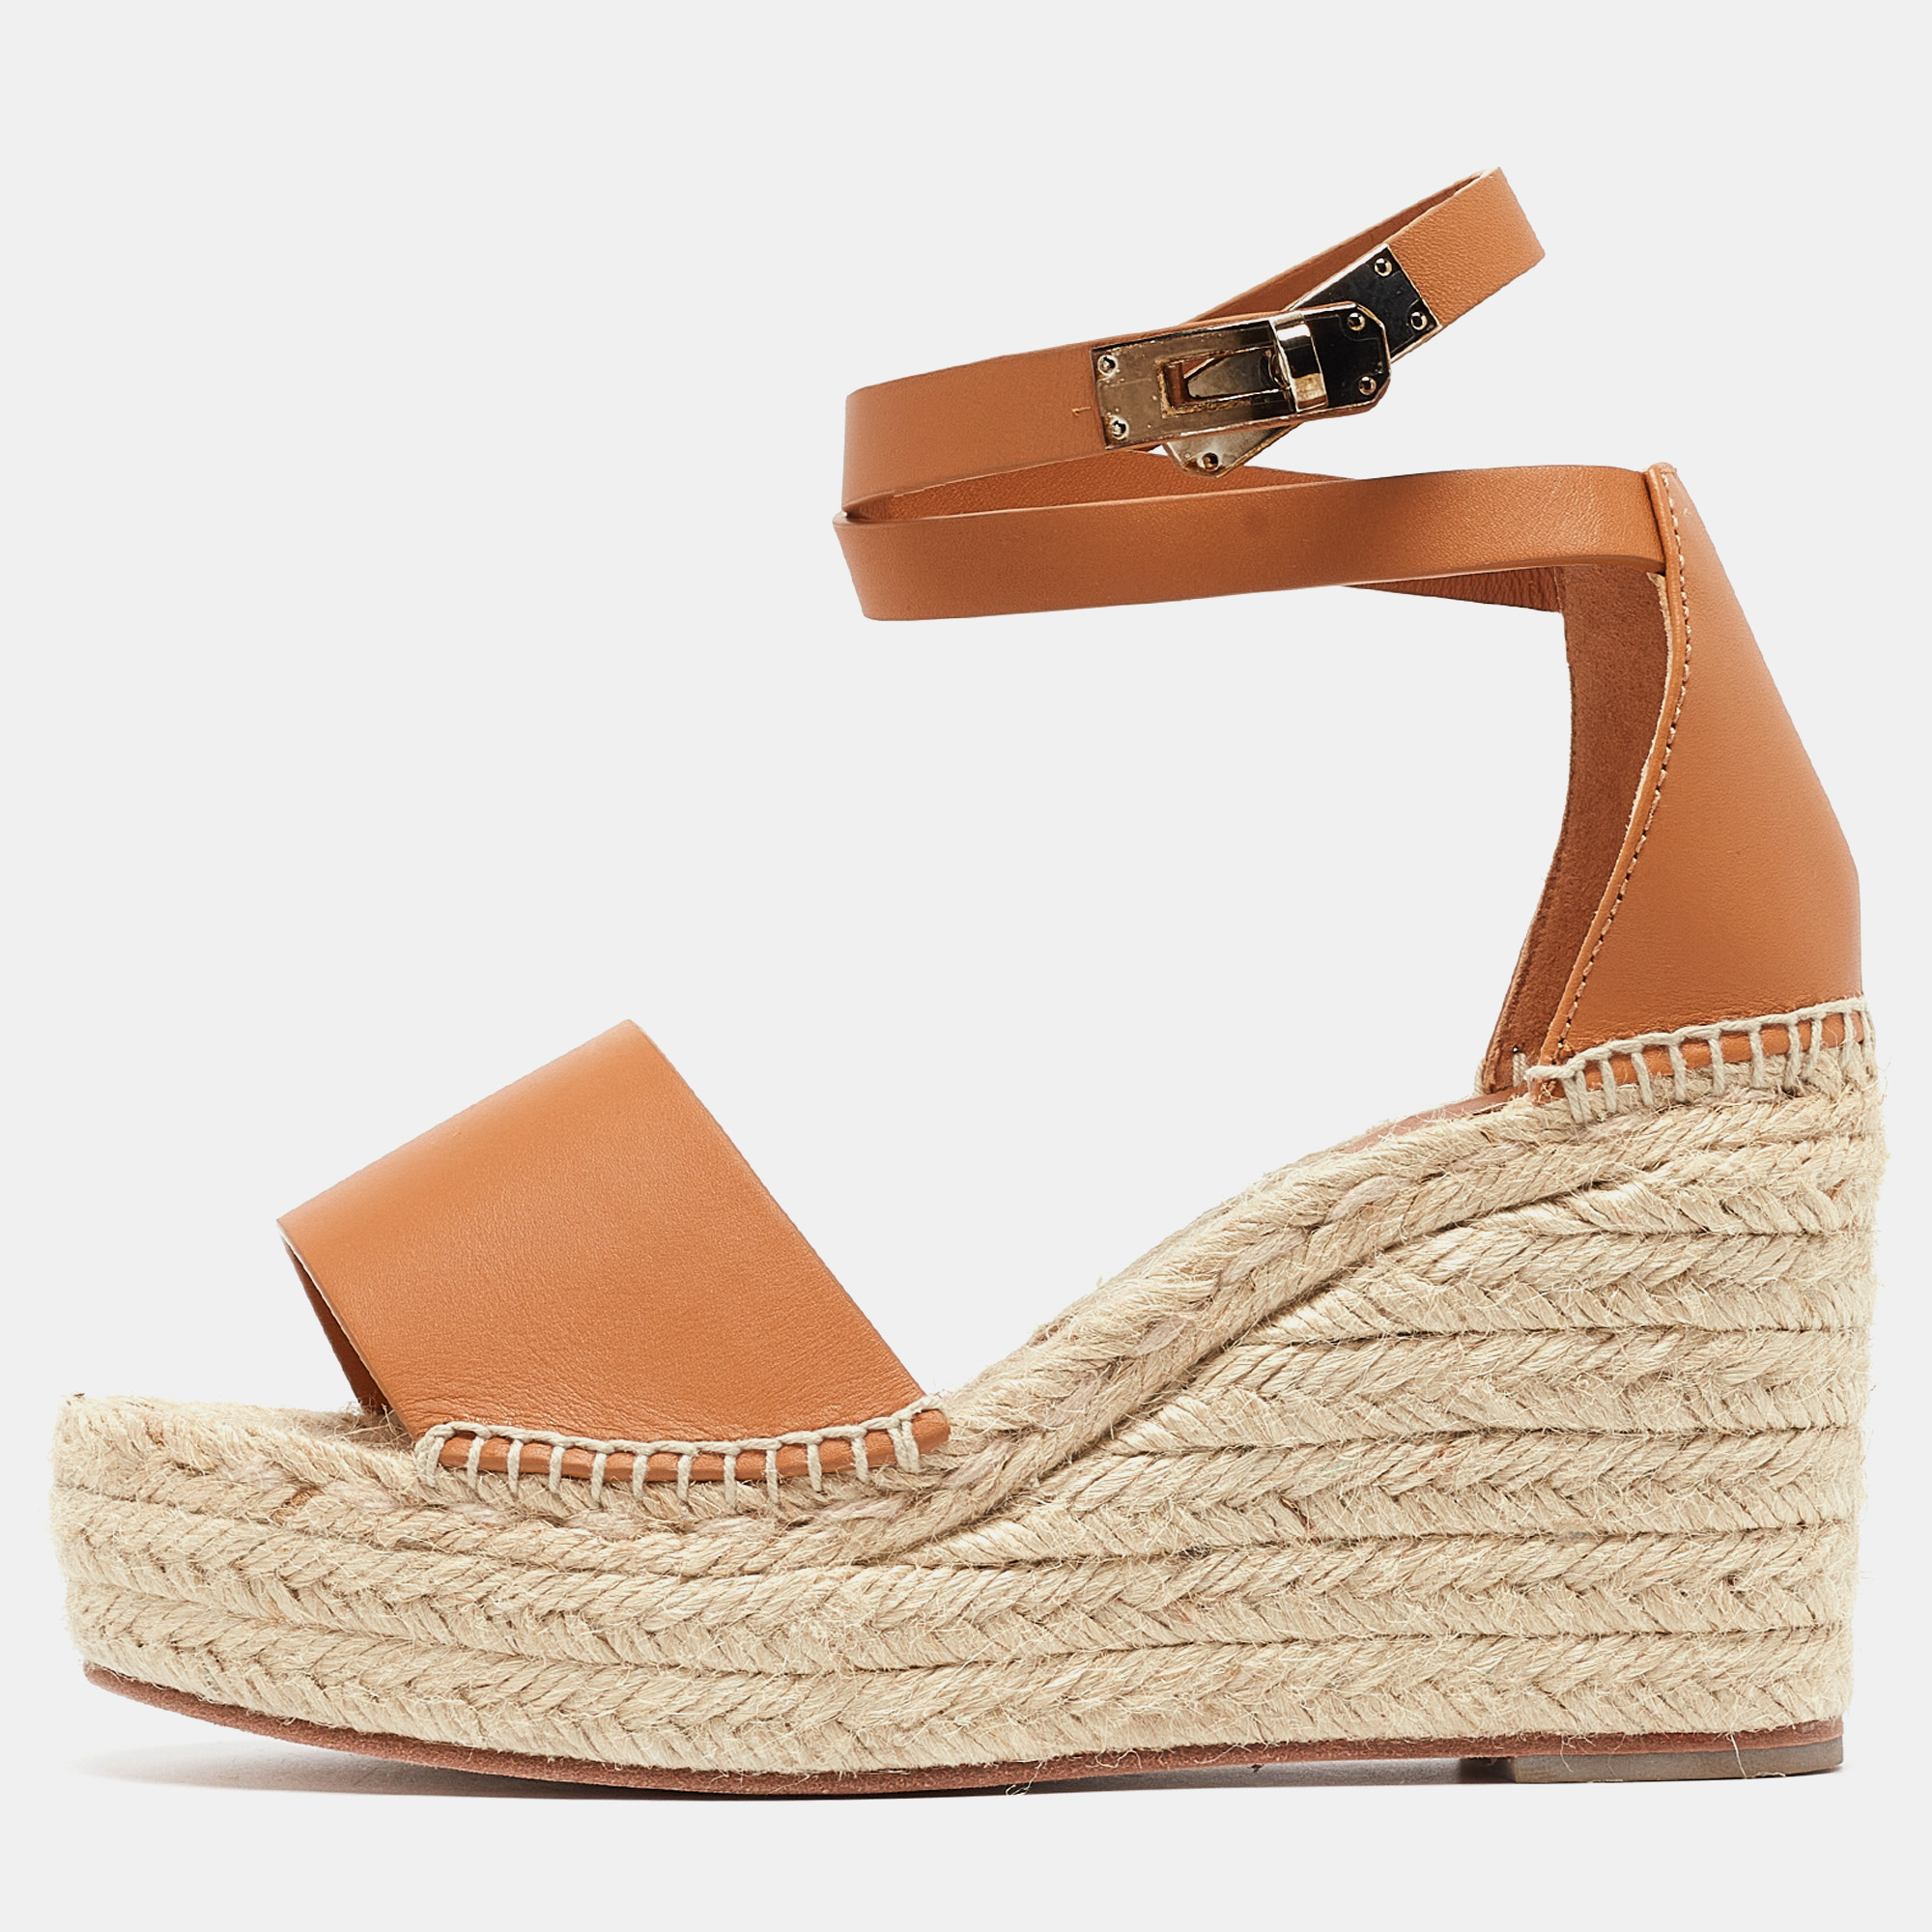 Hermes beige/brown leather espadrille tipoli sandals size 37